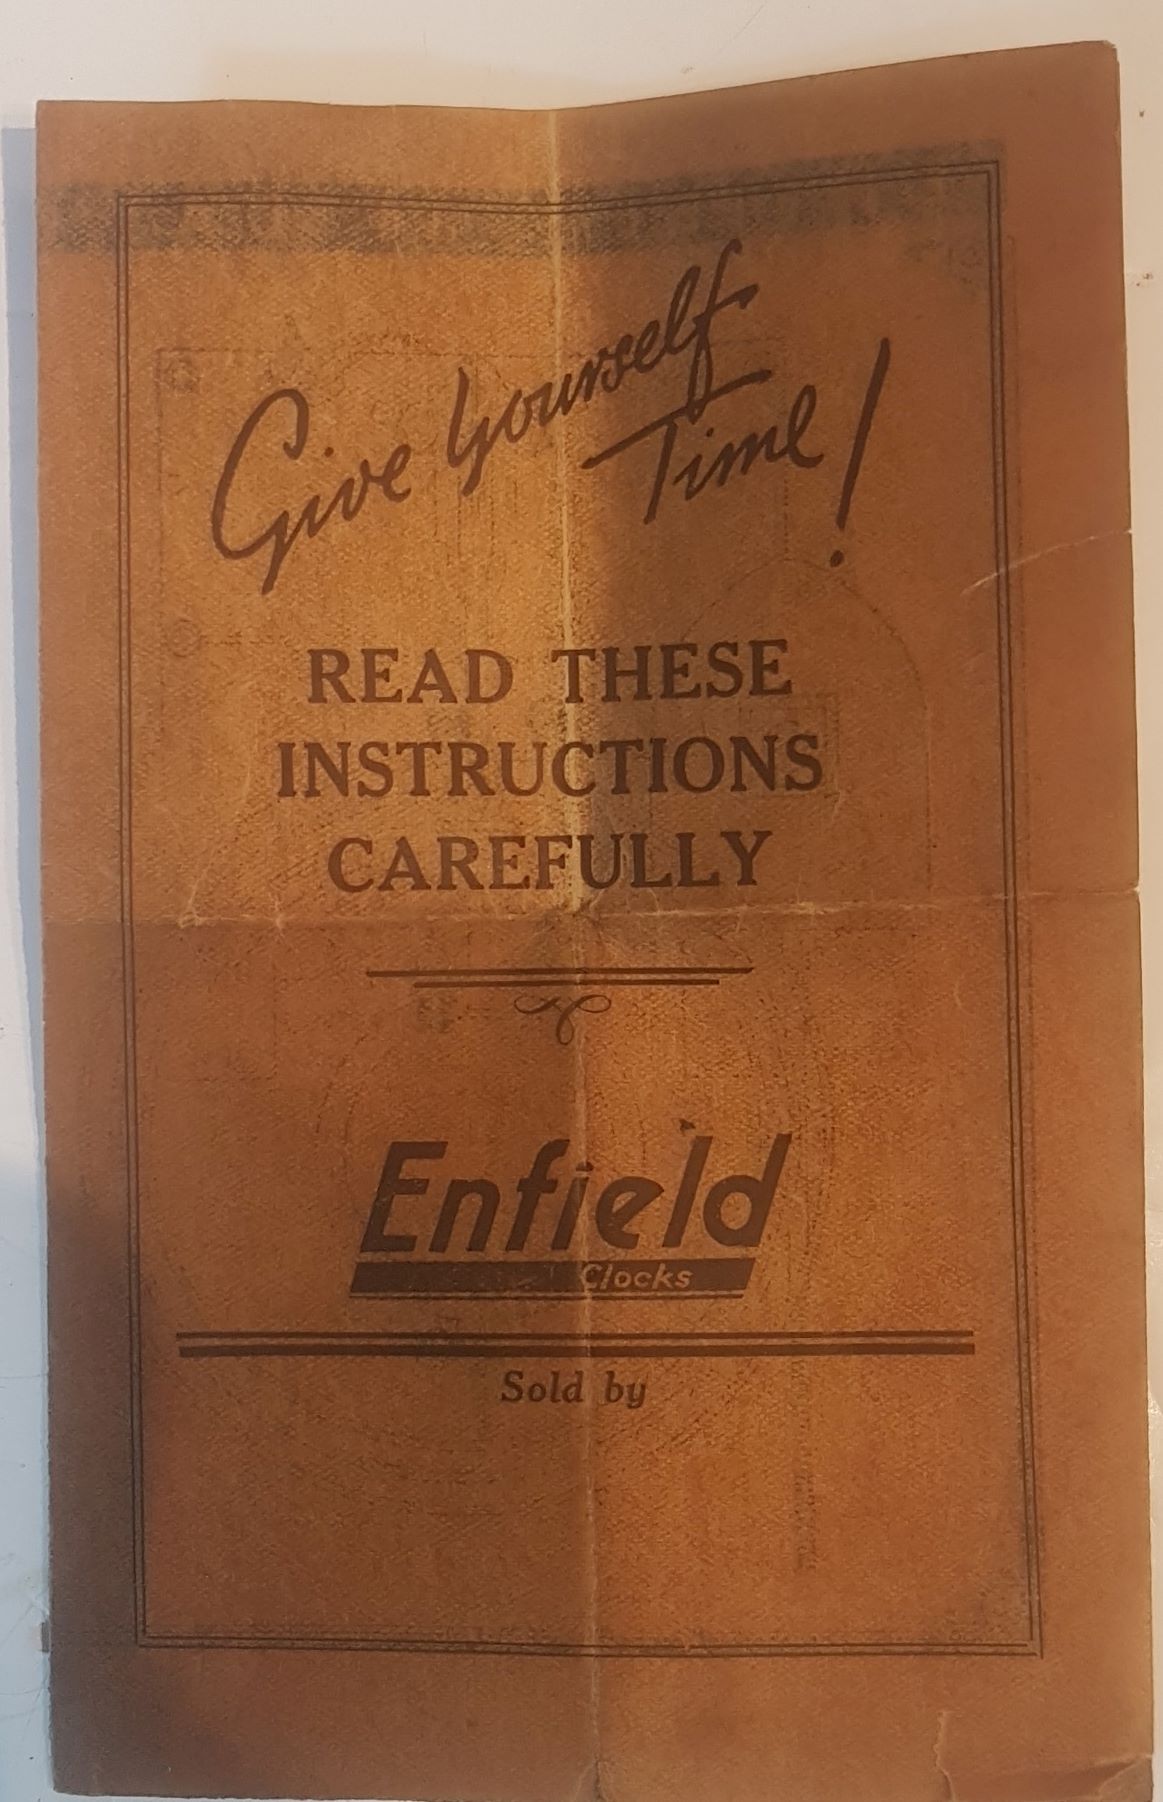 enfield mantel clock instruction leaflet